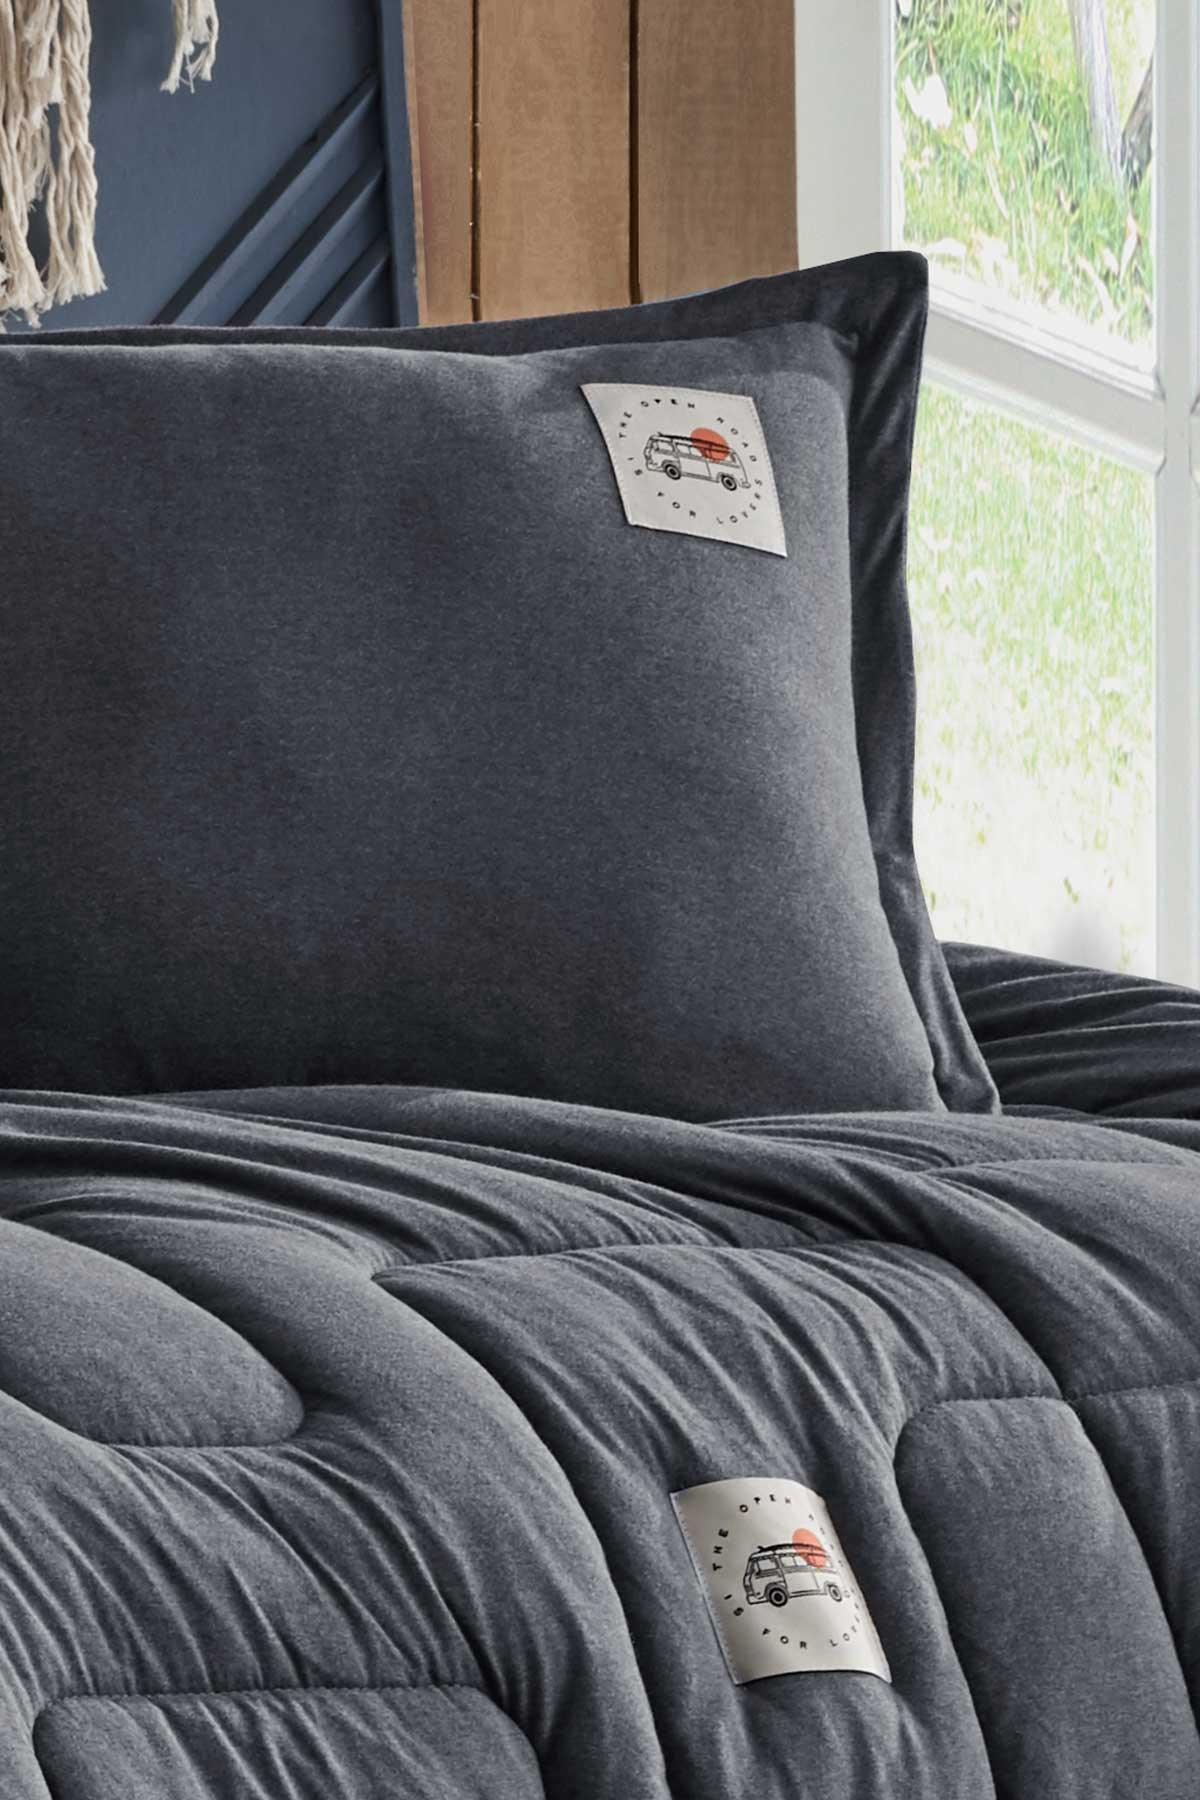 Kapsül Comfort Set Modern Uyku Seti Çift Kişilik Antrasit - Elart Home